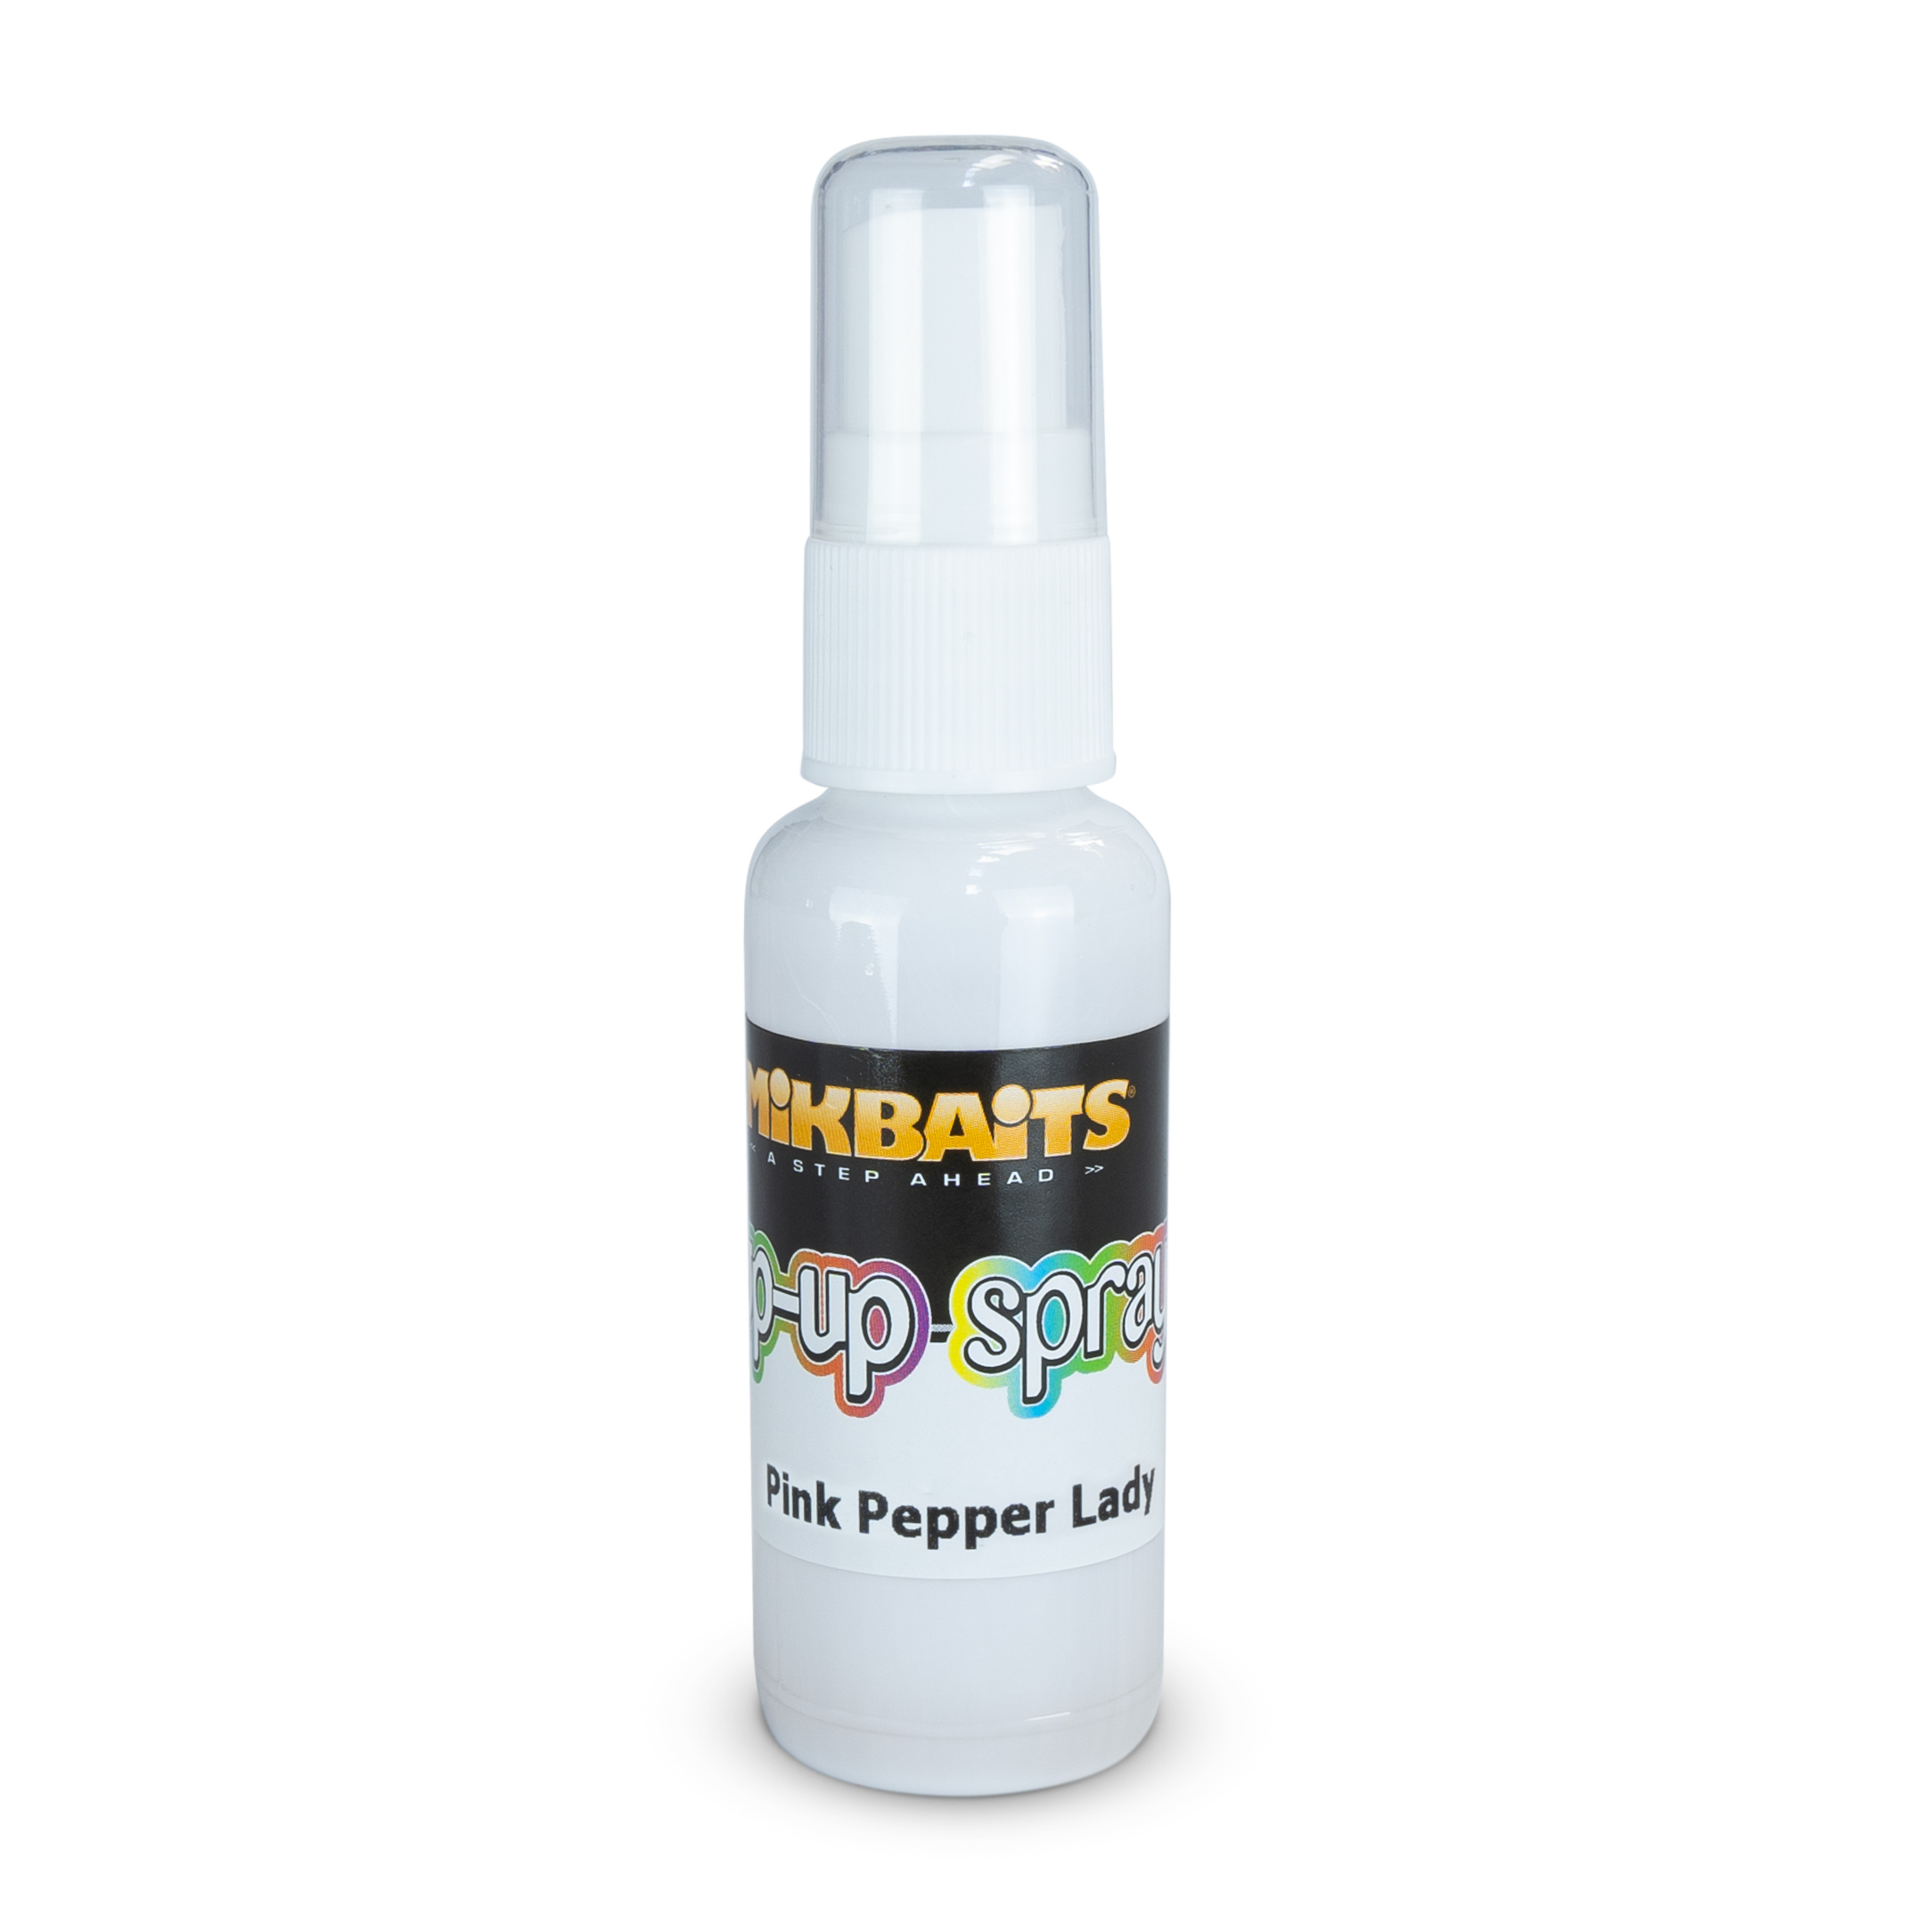 Pop-up spray 30ml - Pink Pepper Lady